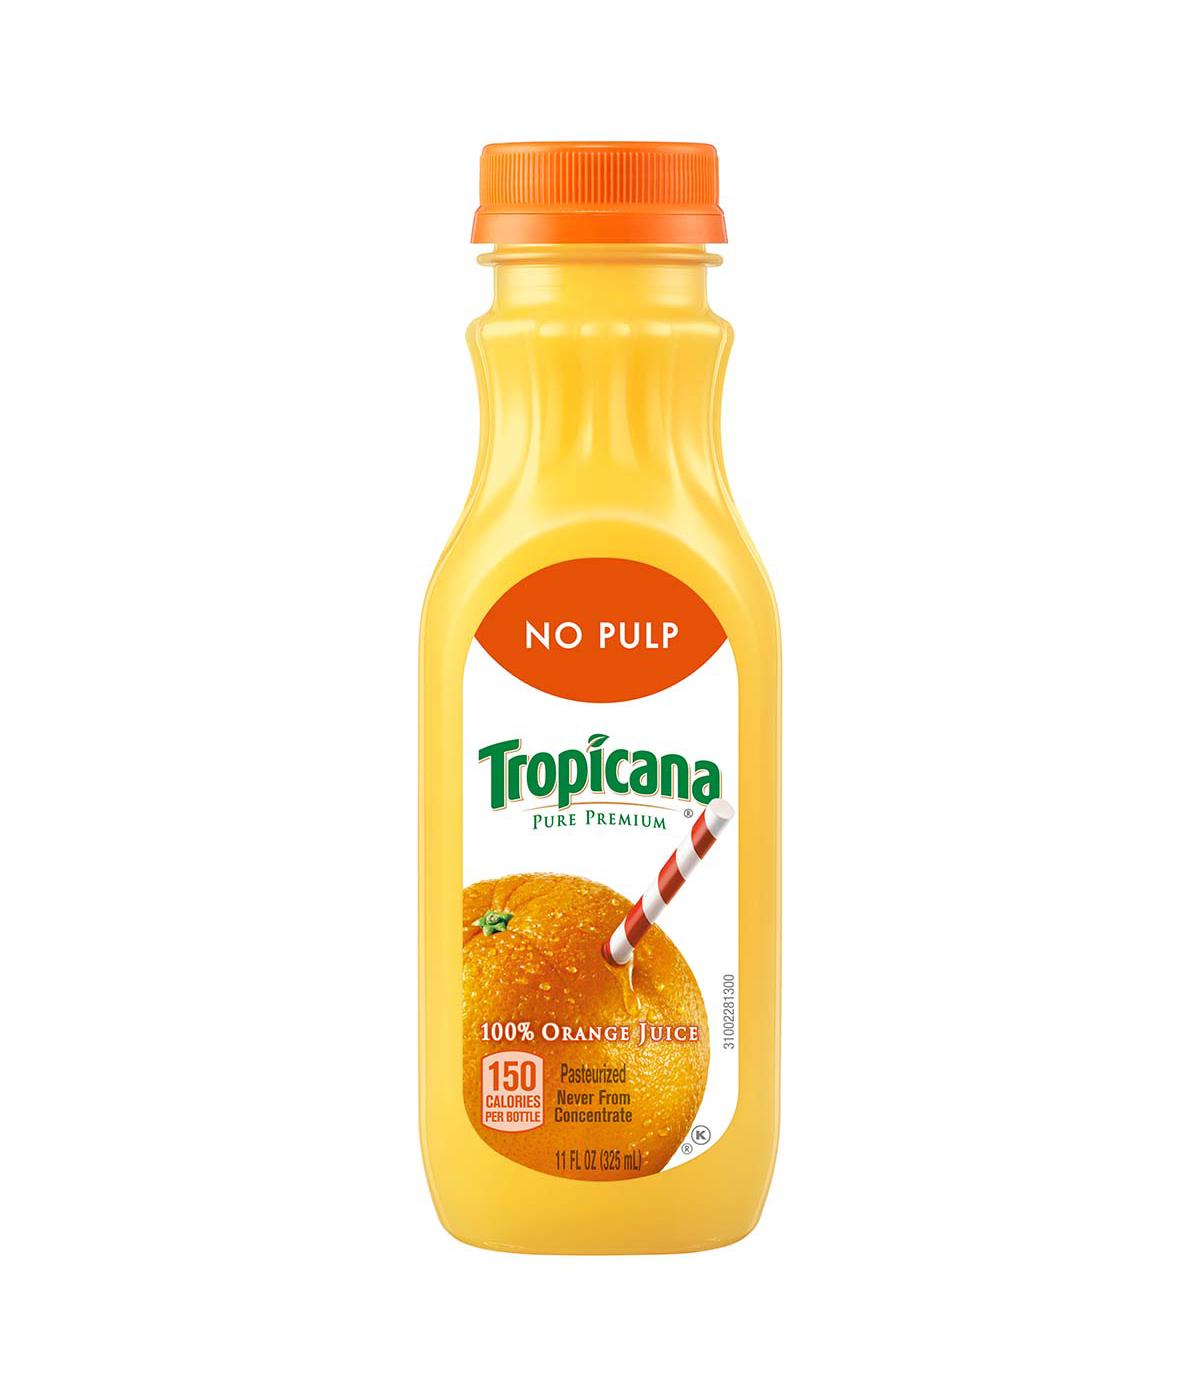 Tropicana Pure Premium No Pulp 100% Orange Juice ; image 1 of 2